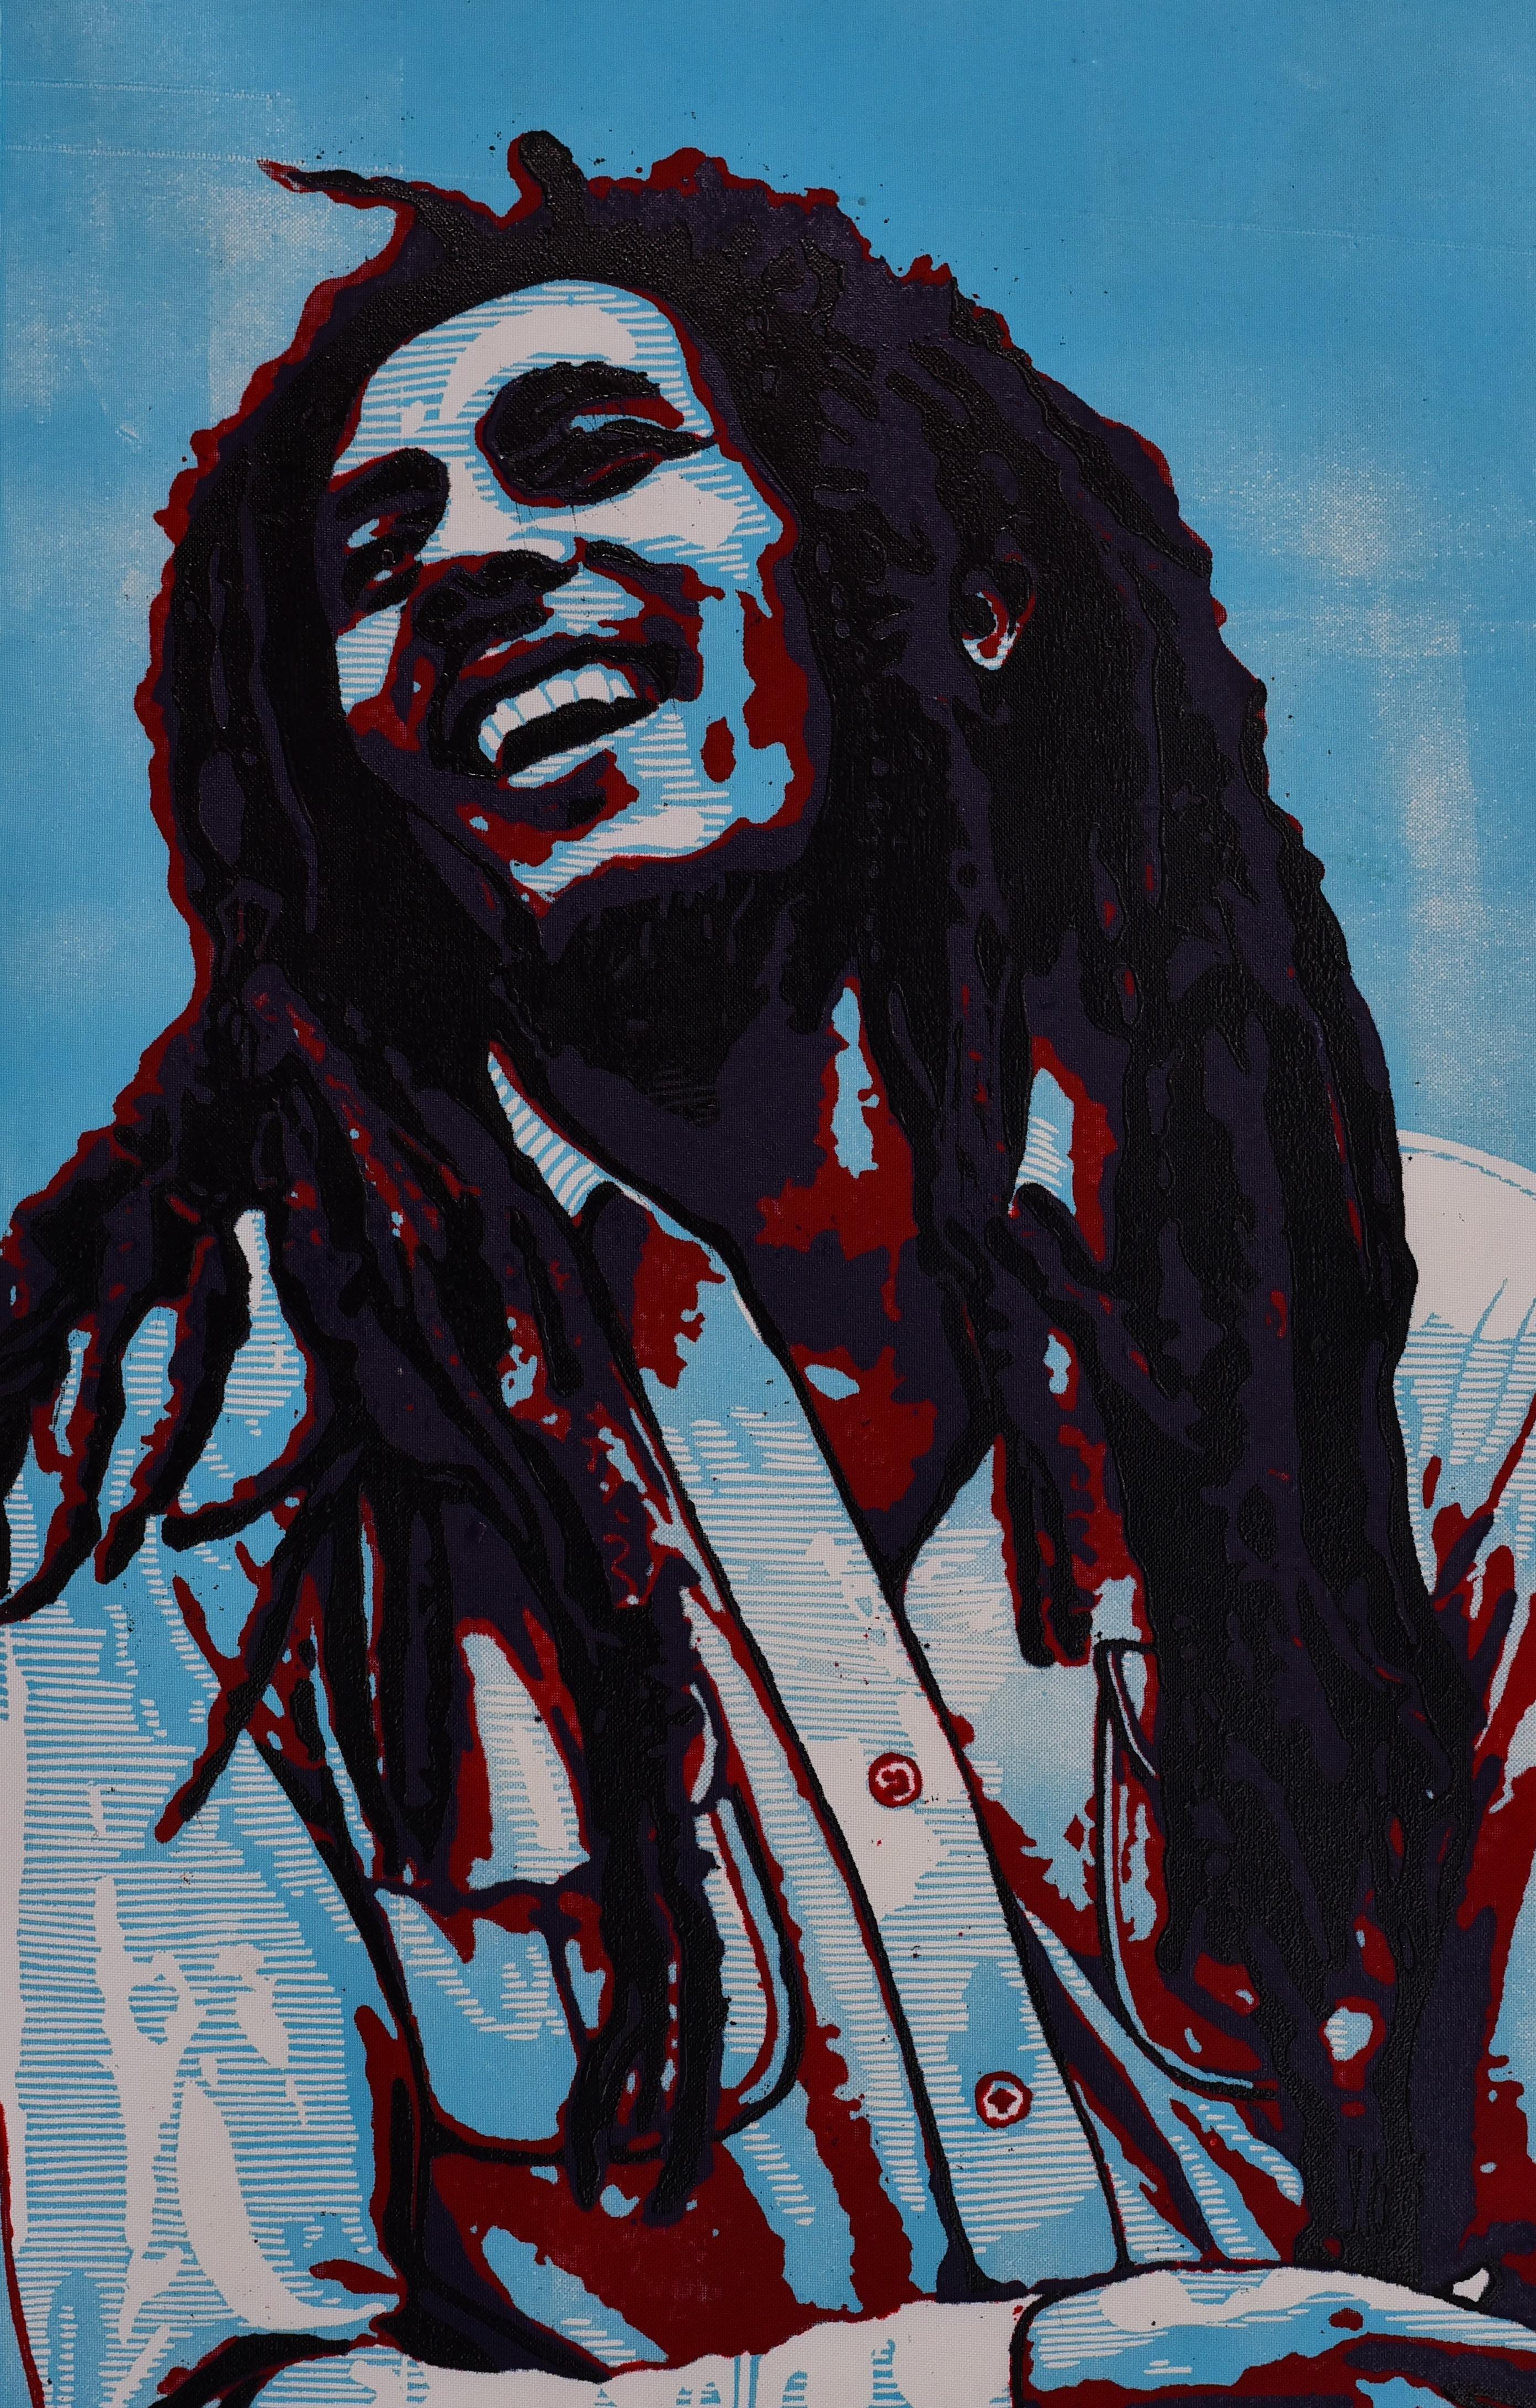 Black Prophet (Bob Marley) 7 - Contemporary Print by Tosin Oyeniyi 